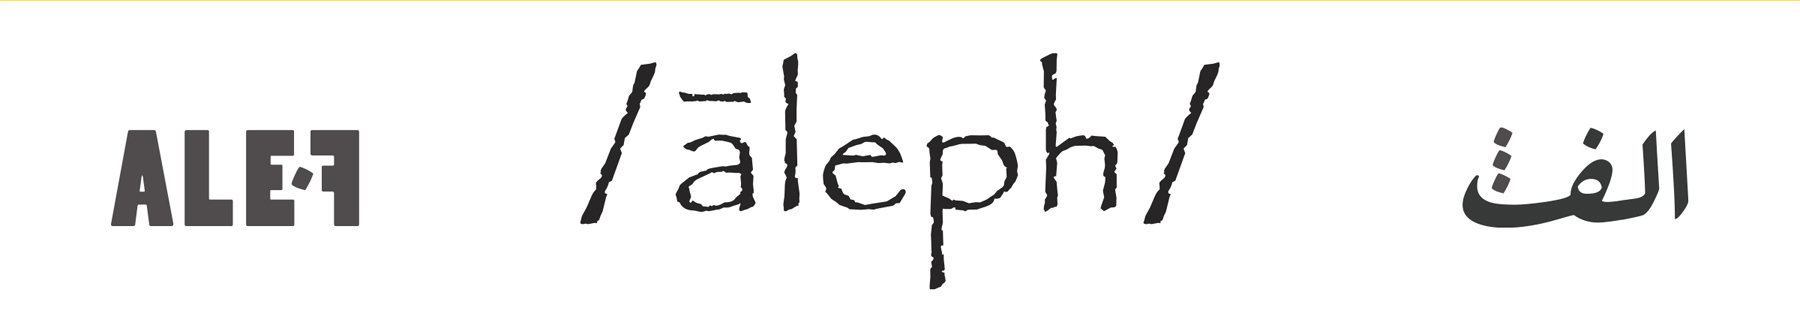 Aleph Logo Ideas